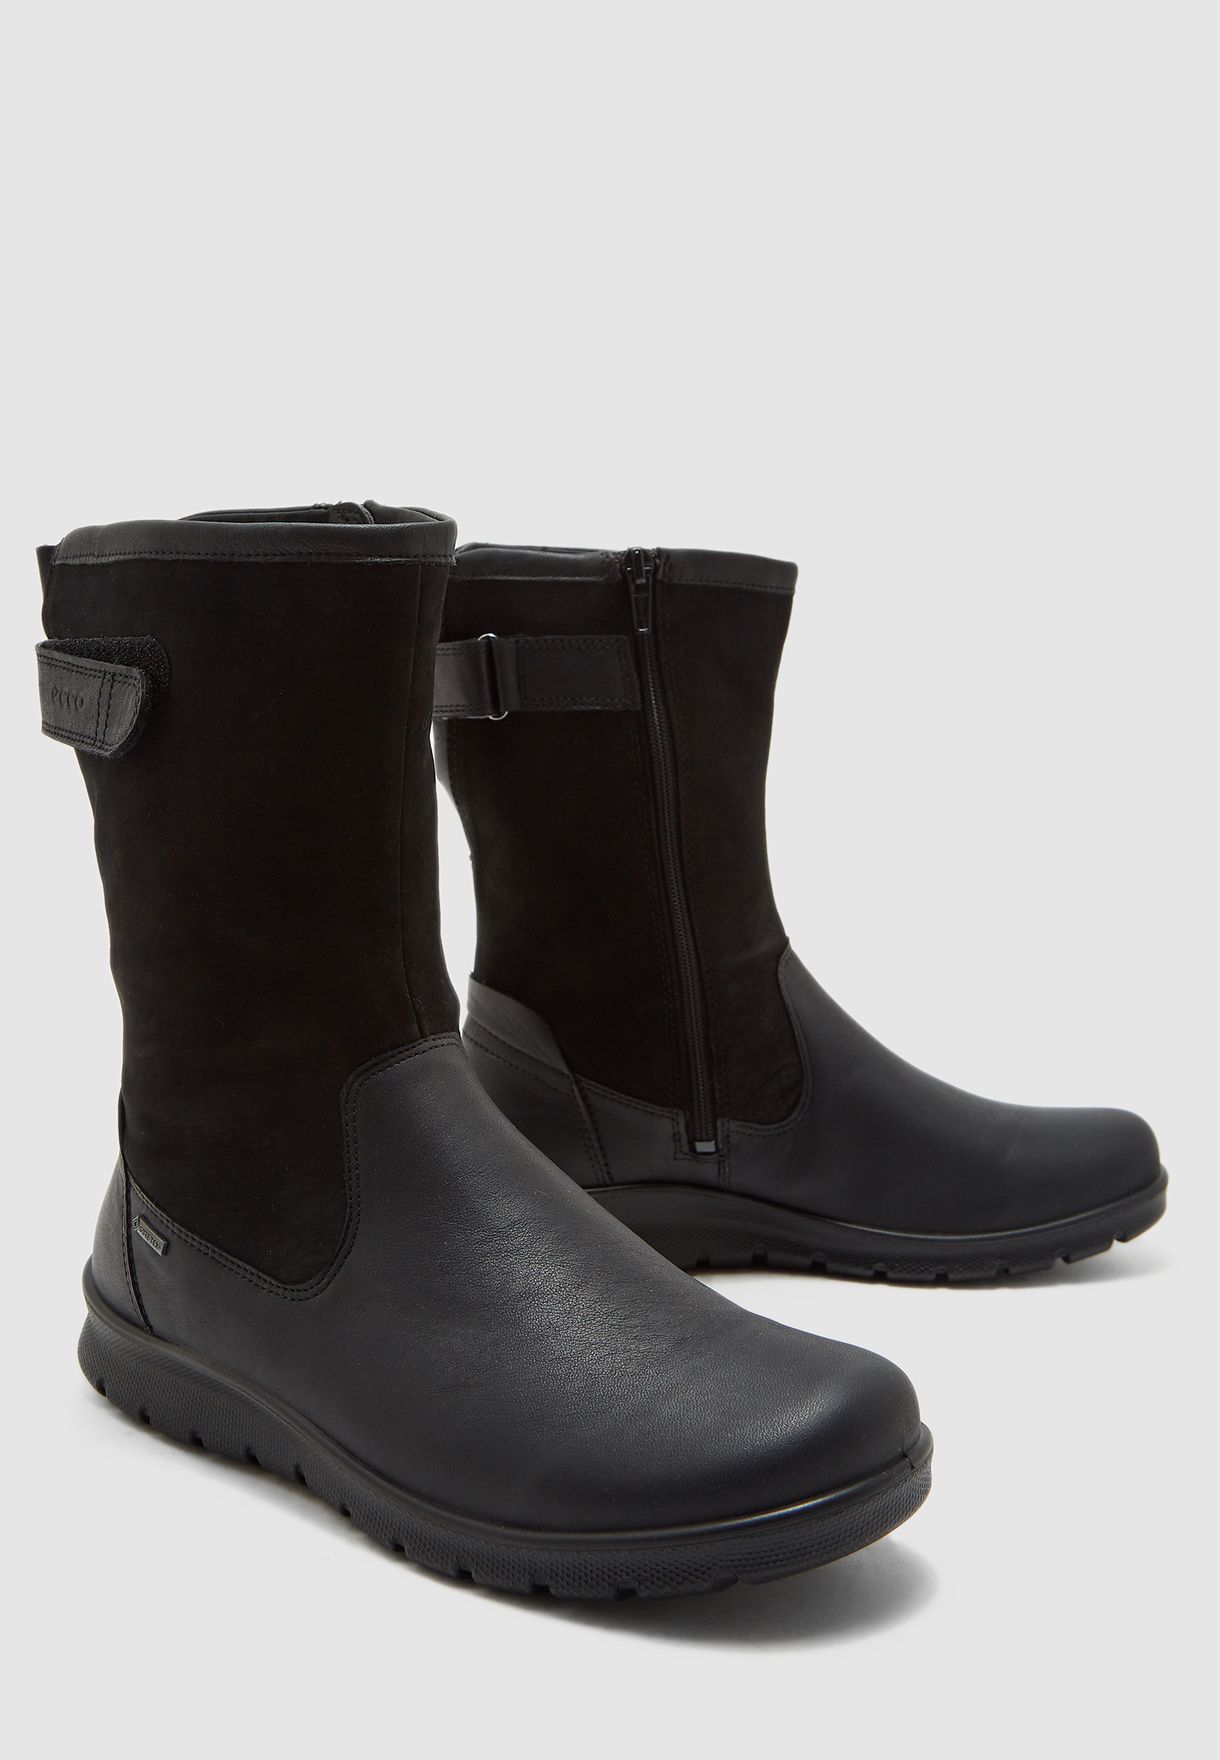 velcro work boots